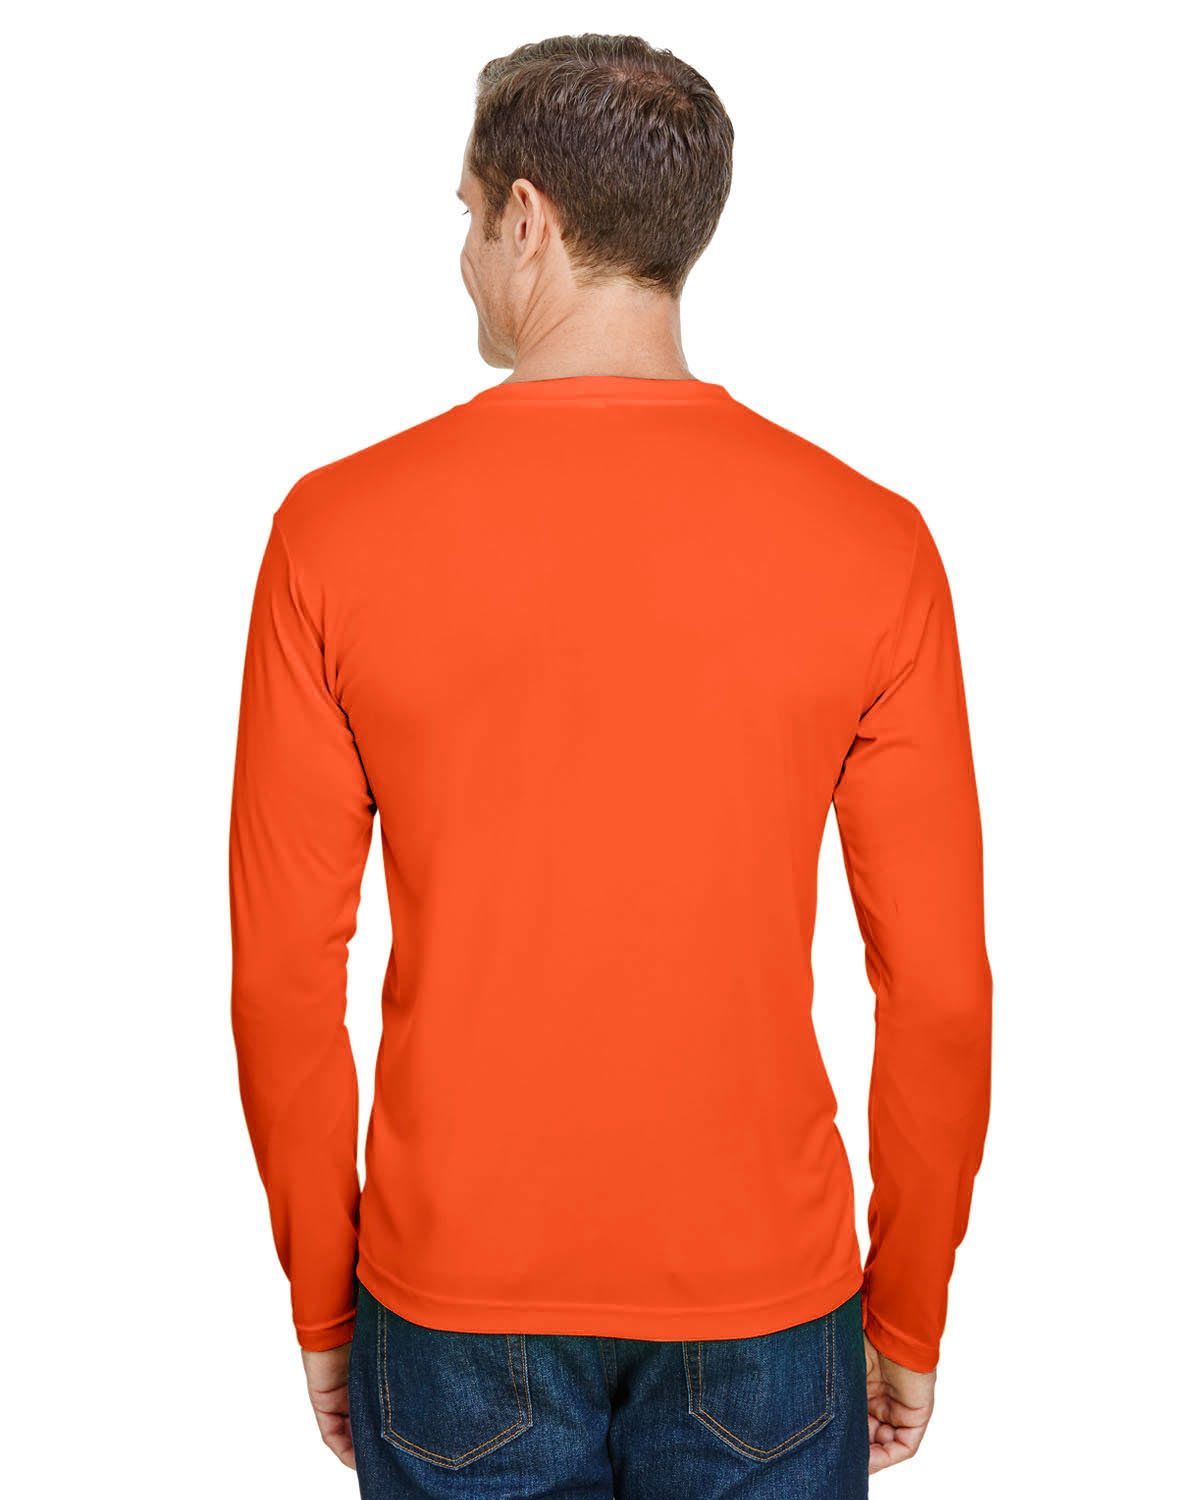 'Bayside BA5360 Unisex Polyester Long-Sleeve T-Shirt'